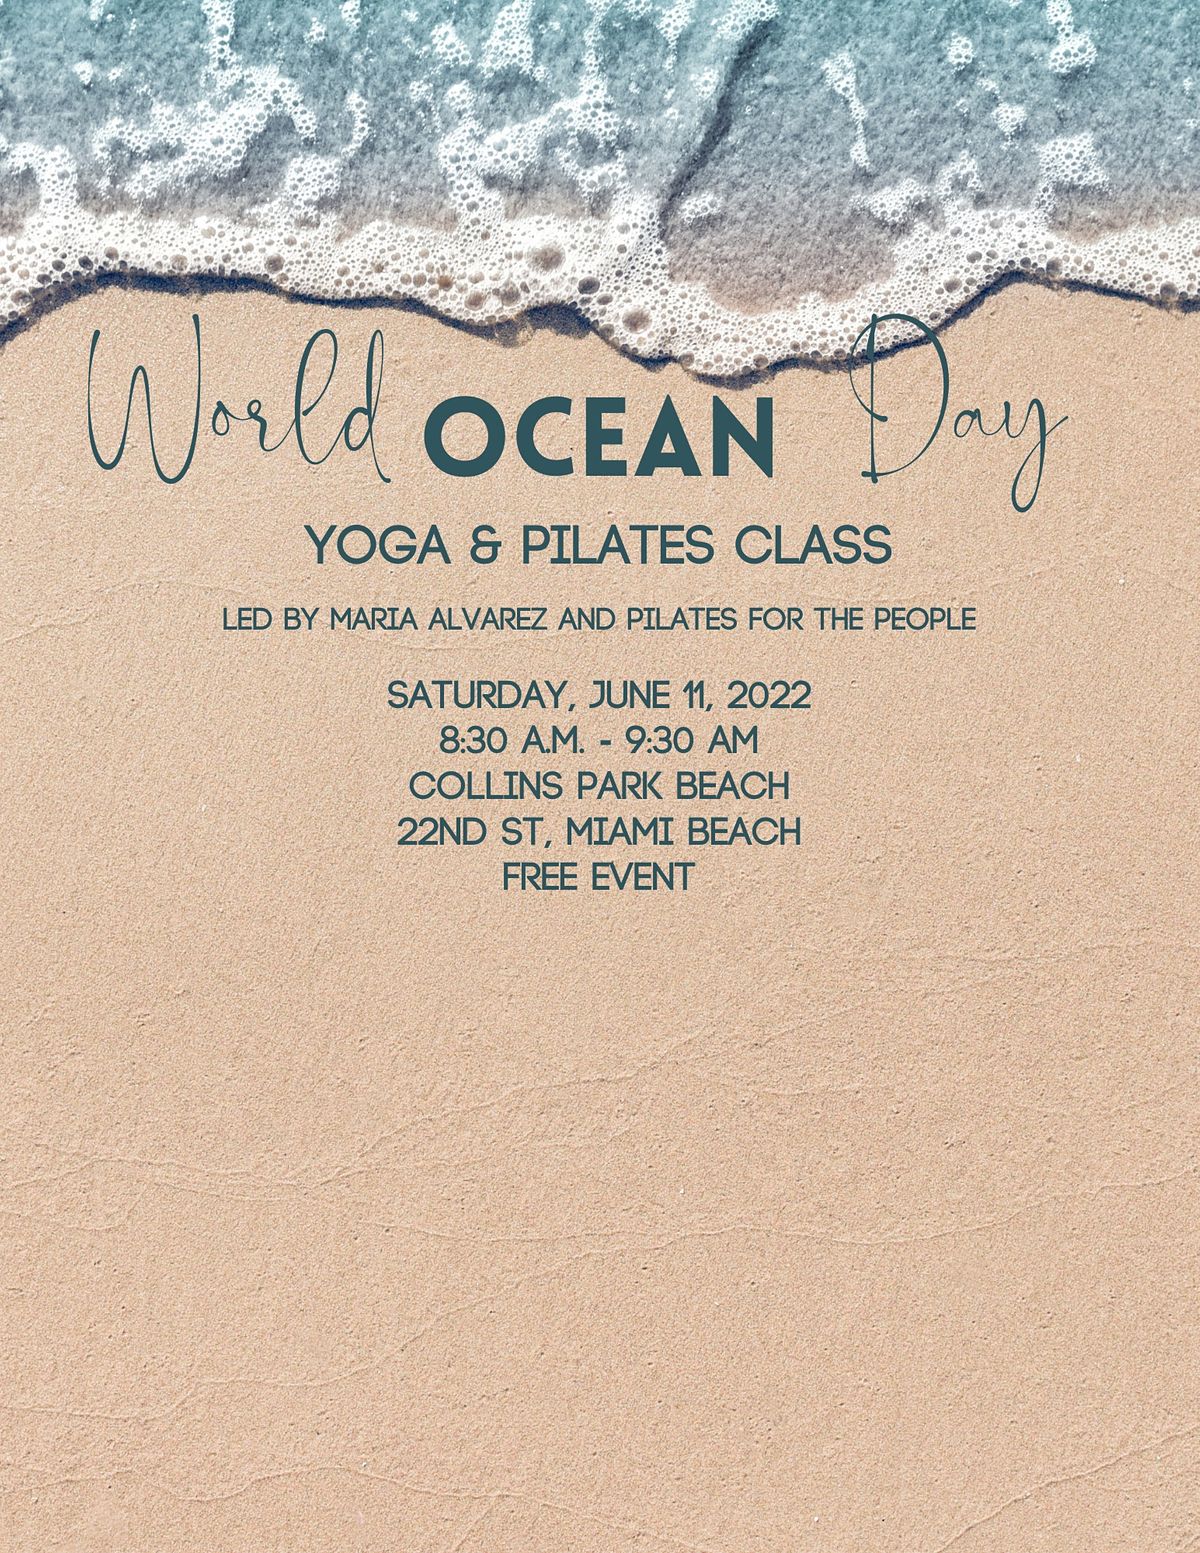 2022 World Ocean Celebration - Yoga & Pilates Class